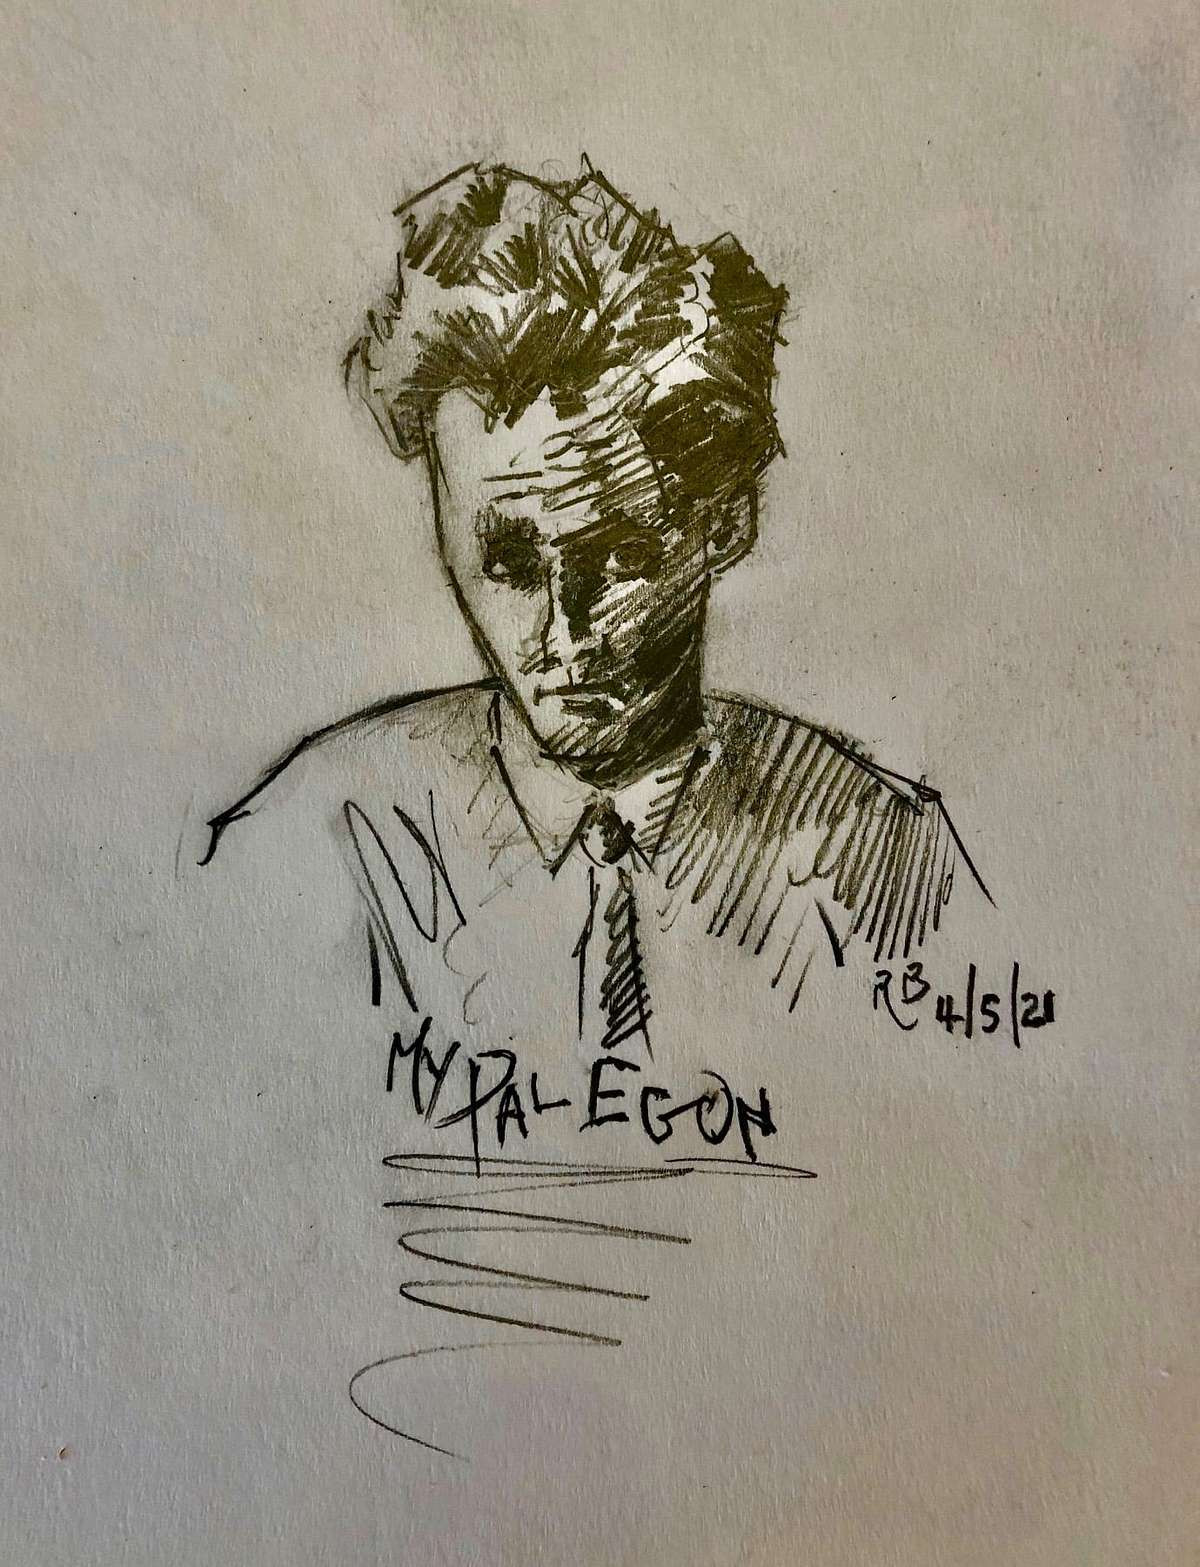 "My Pal Egon"